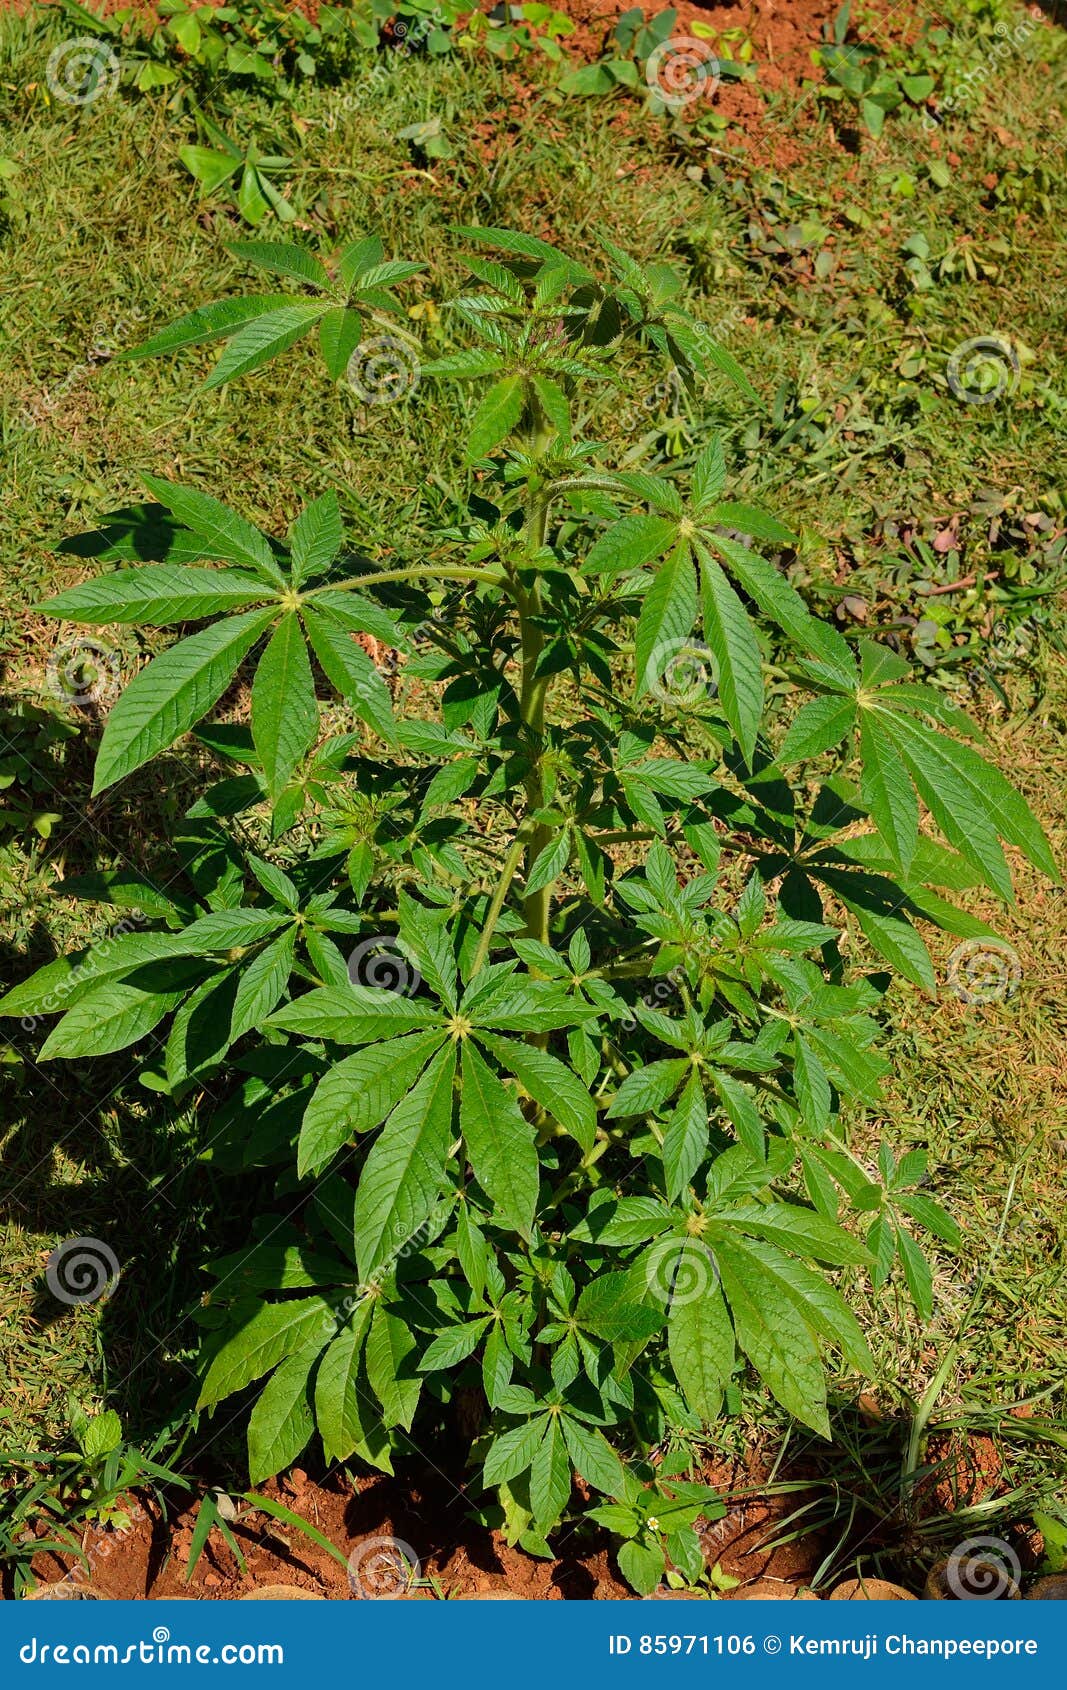 Дерево марихуана семена конопли для карпа